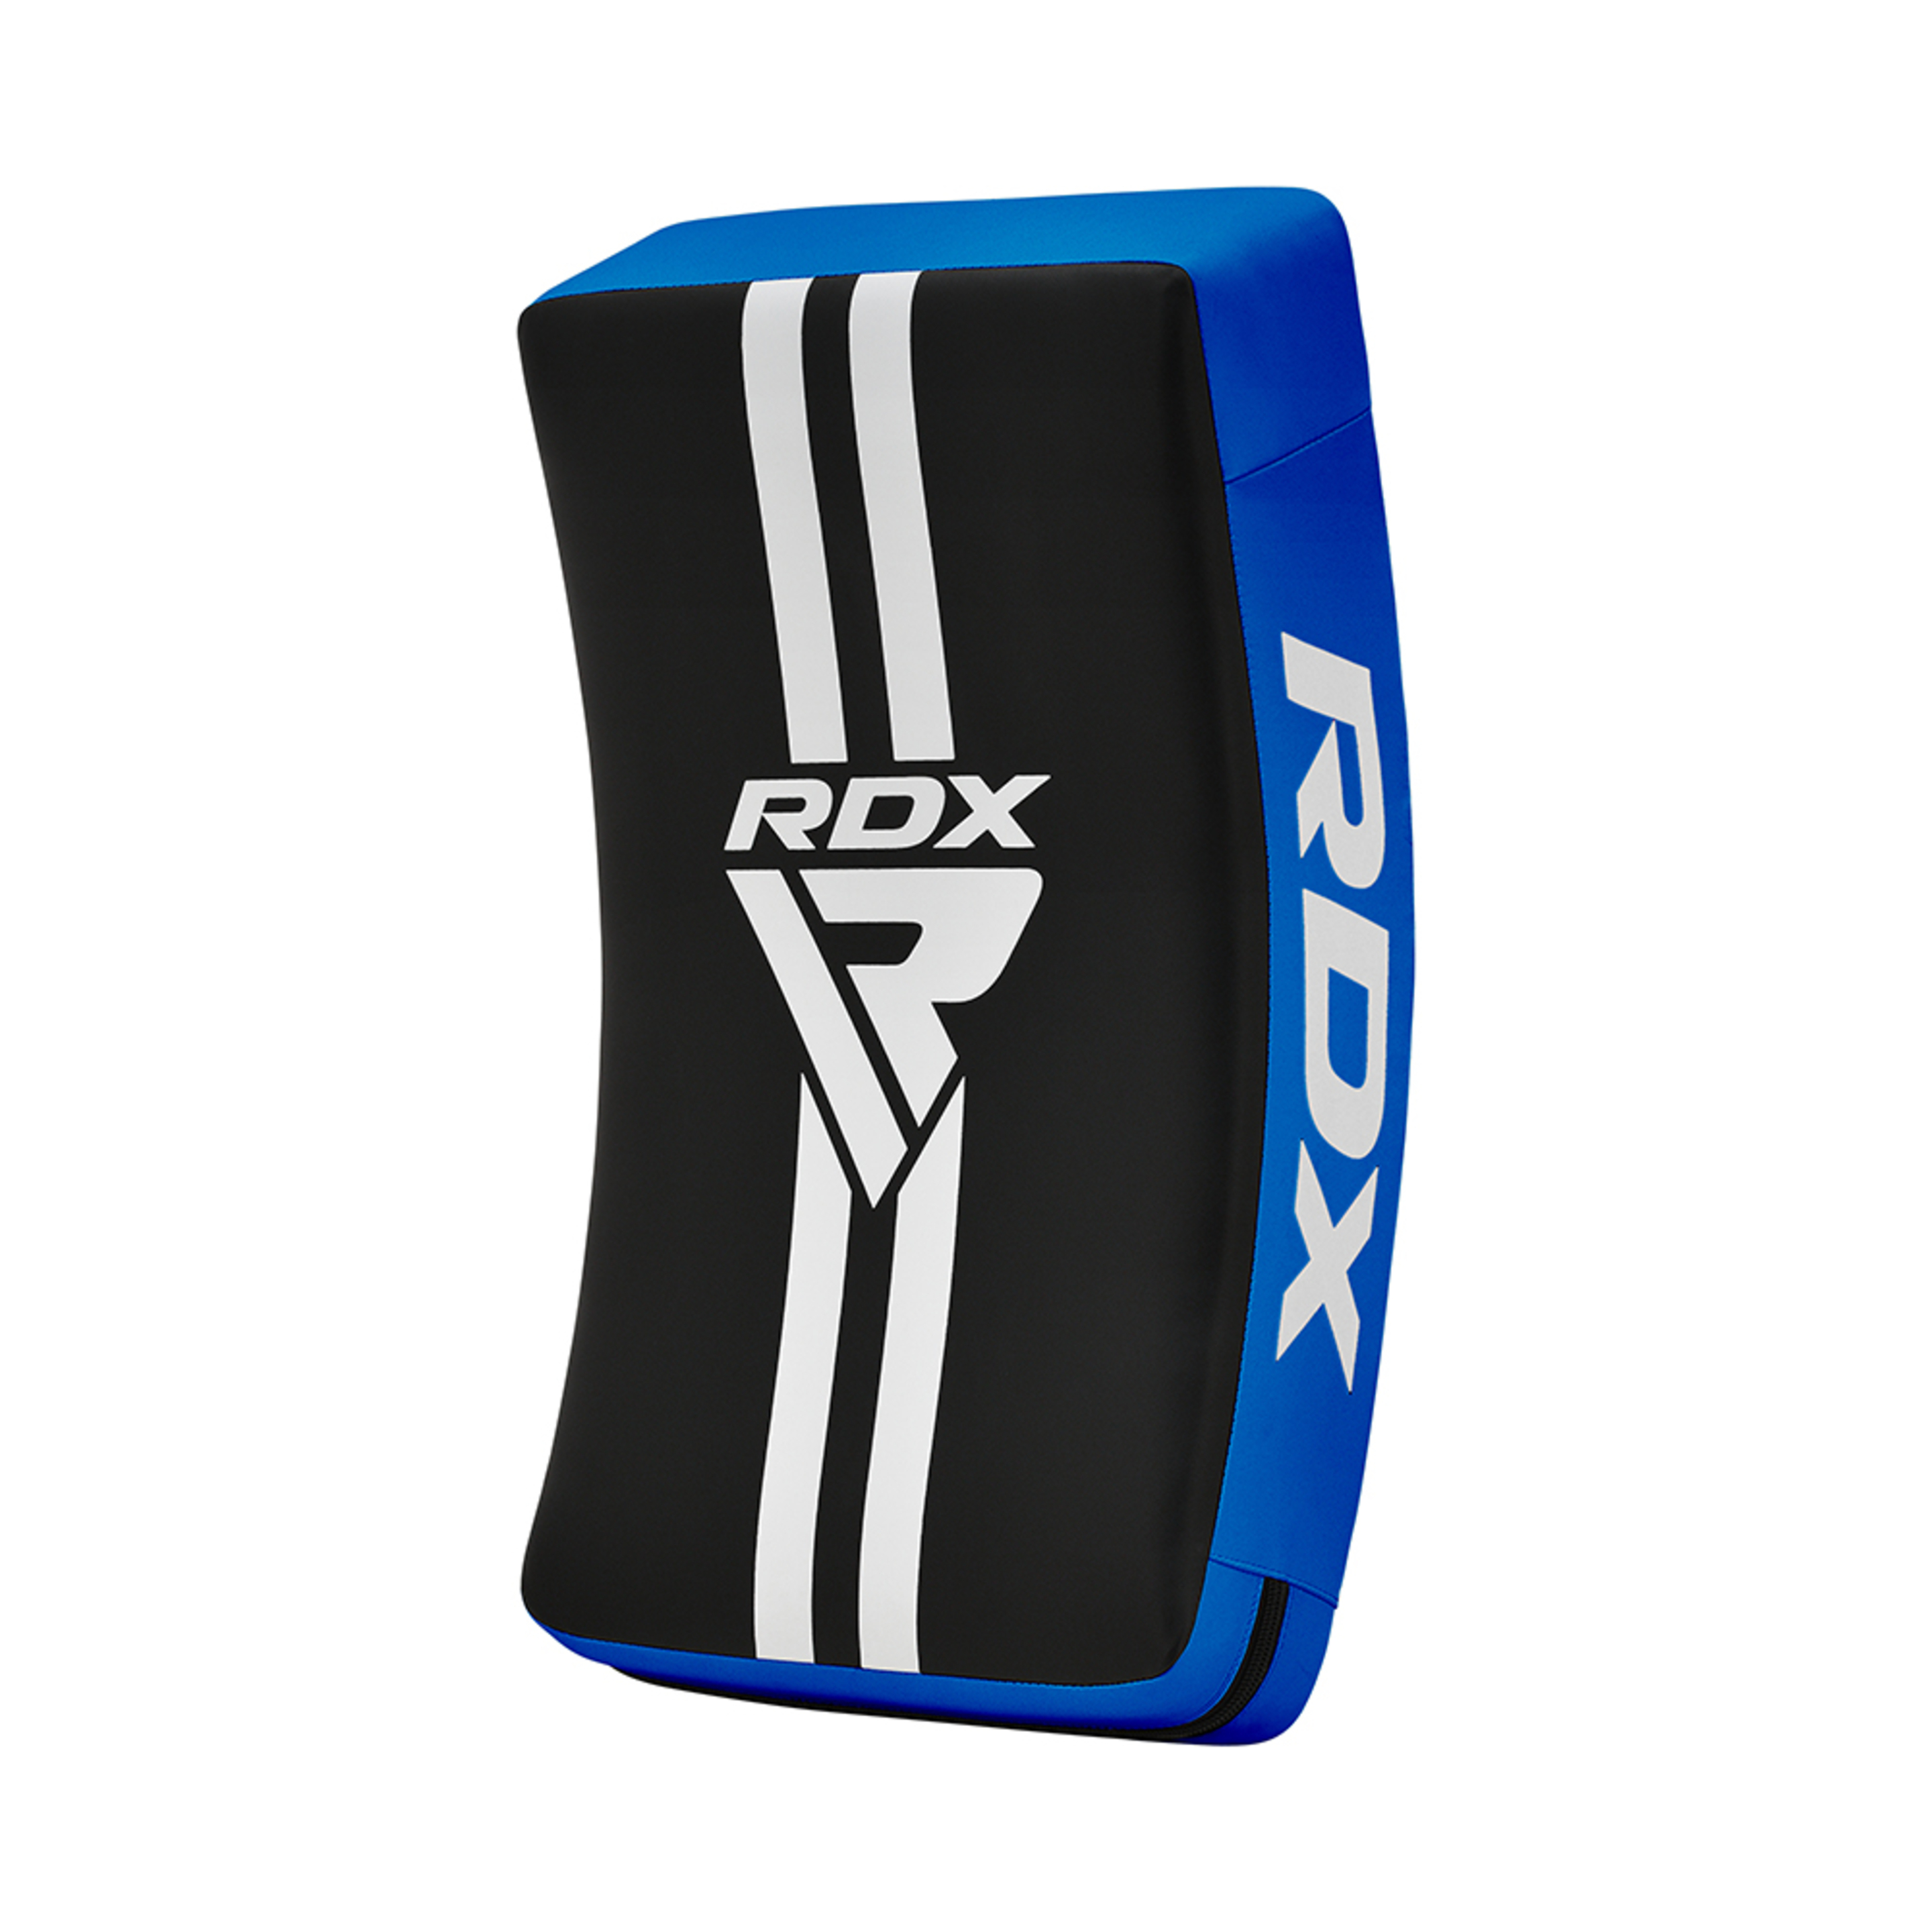 Escudo Protector Rdx Ksr-t1 - azul - 